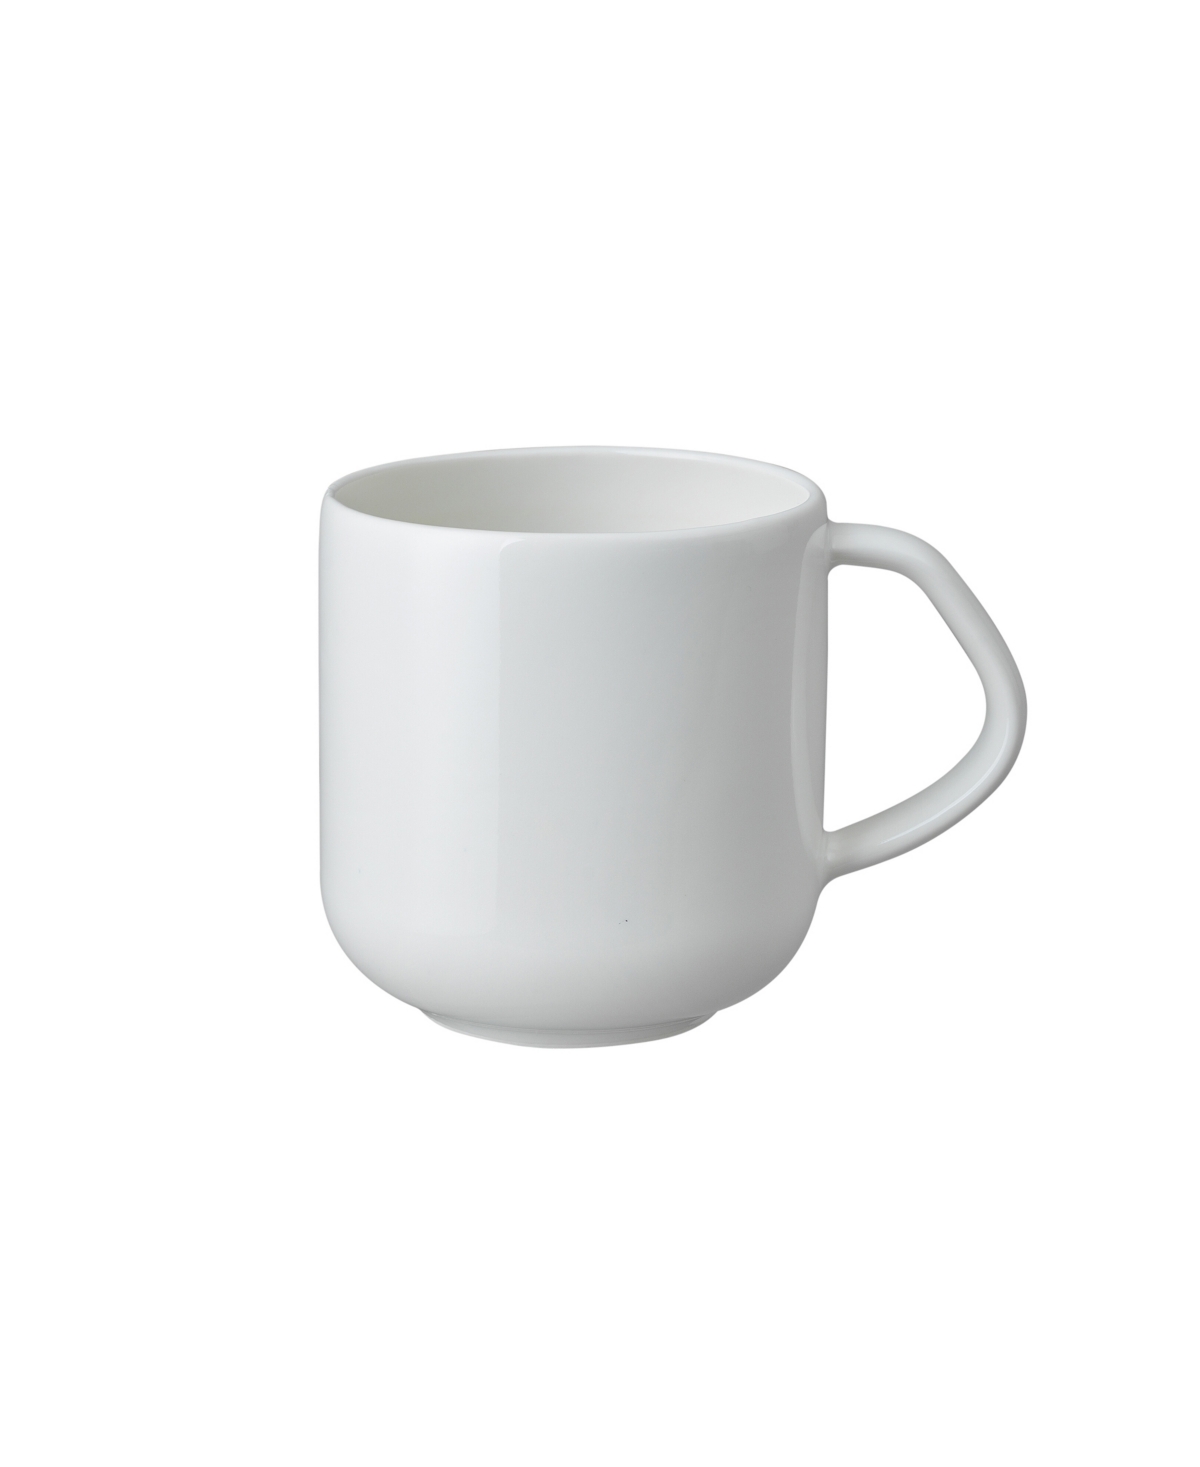 Denby Porcelain Classic Large Mug In White